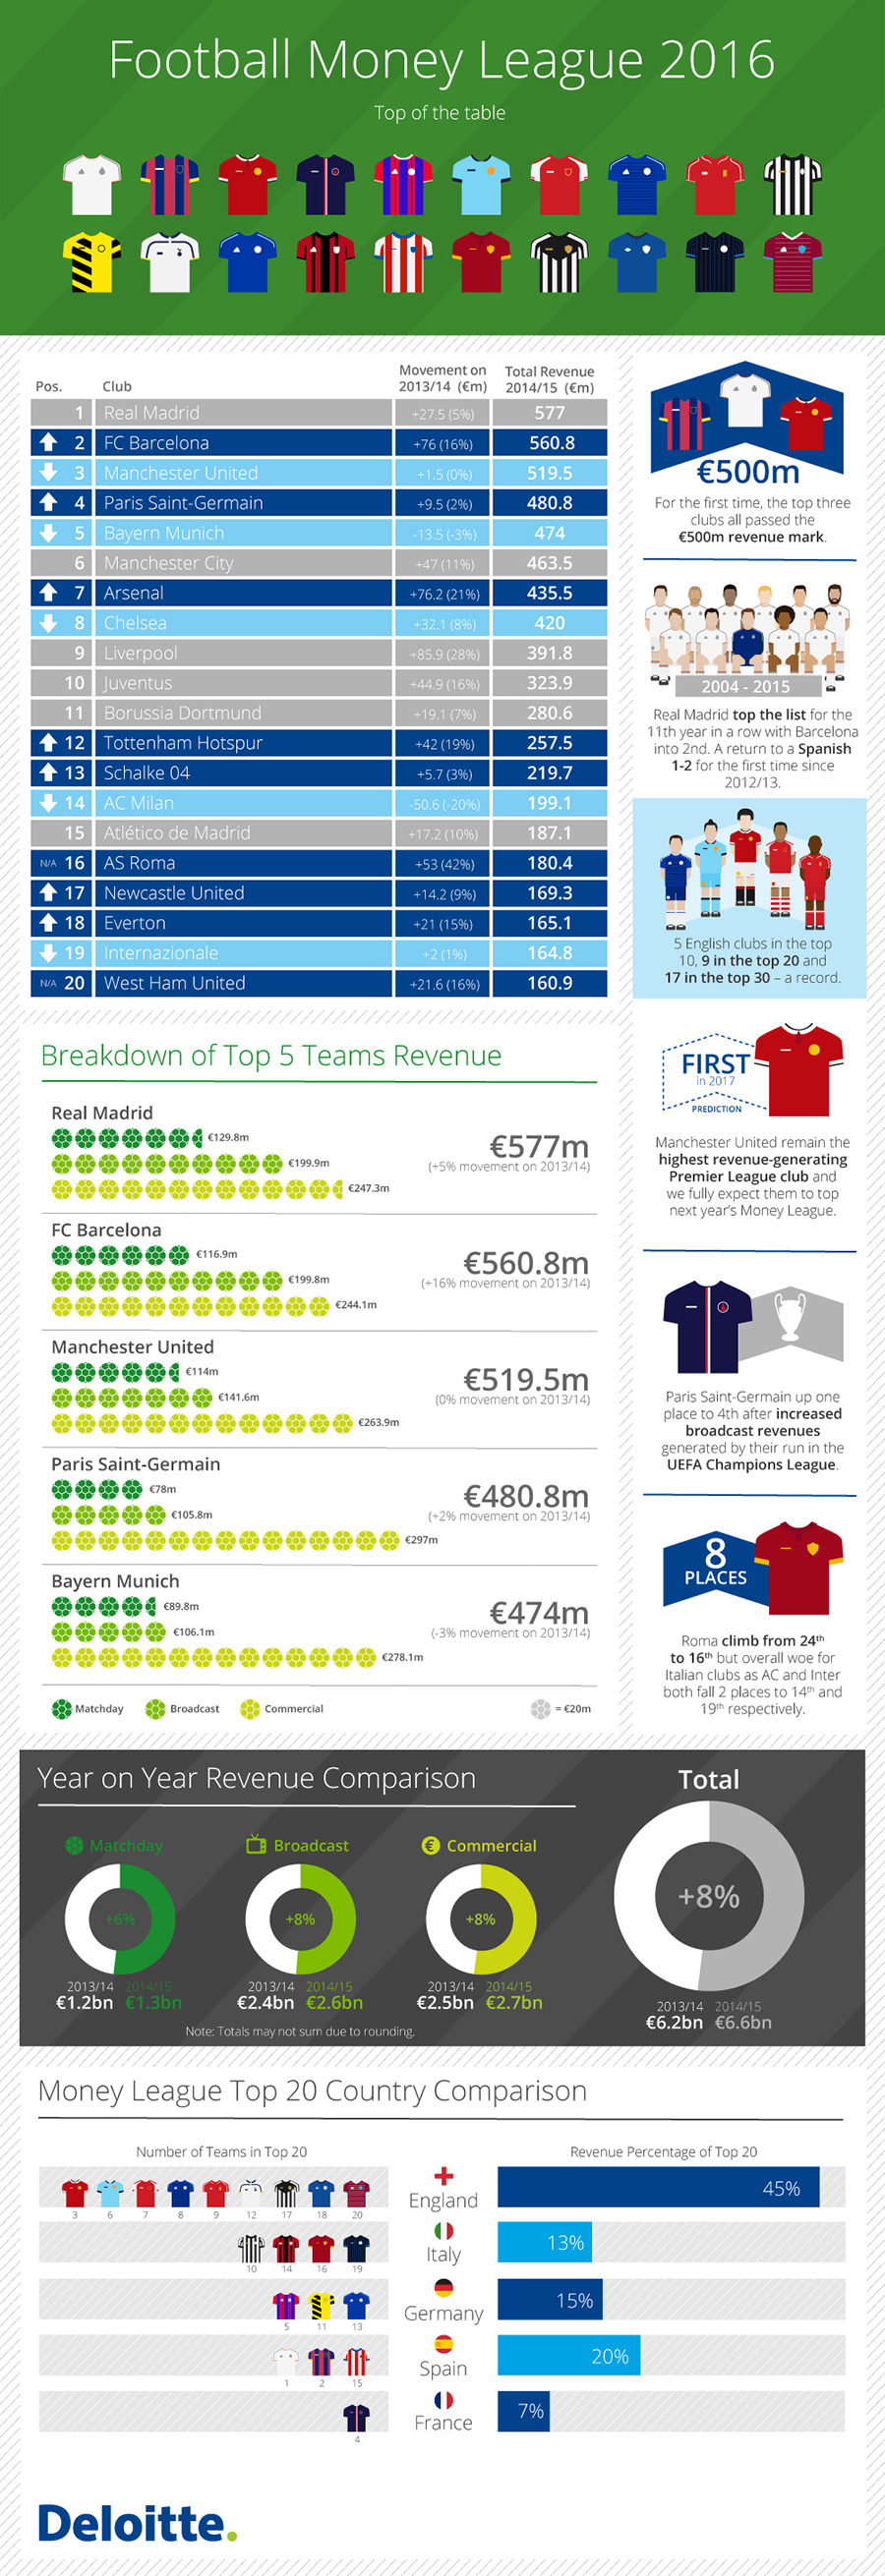 deloitte-sports-football-money-league-2016-infographic